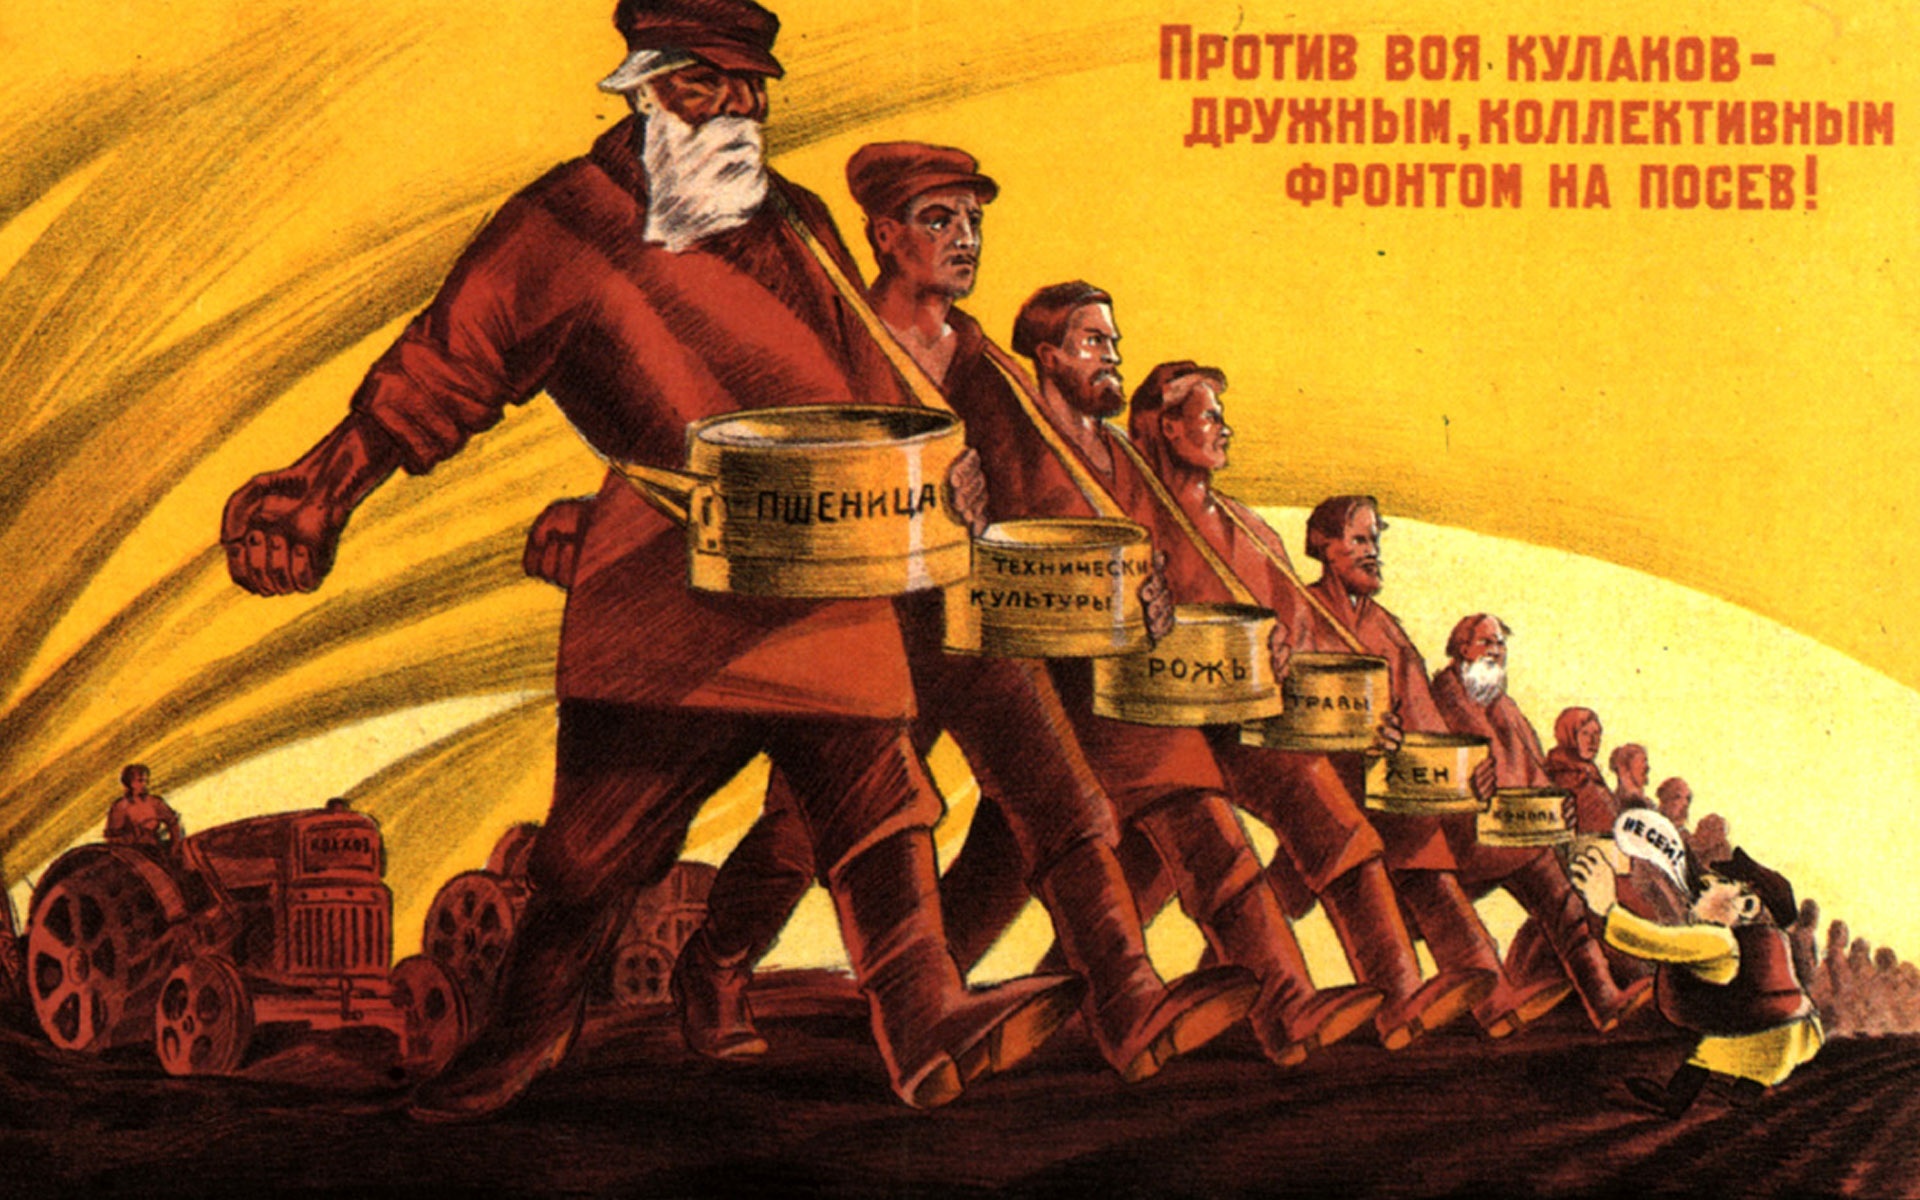 Конституция агитация. Коллективизация в СССР постеры. Коллективизация 1930 плакаты. Плакат кулаки раскулачивание. Пропаганда коллективизации СССР.